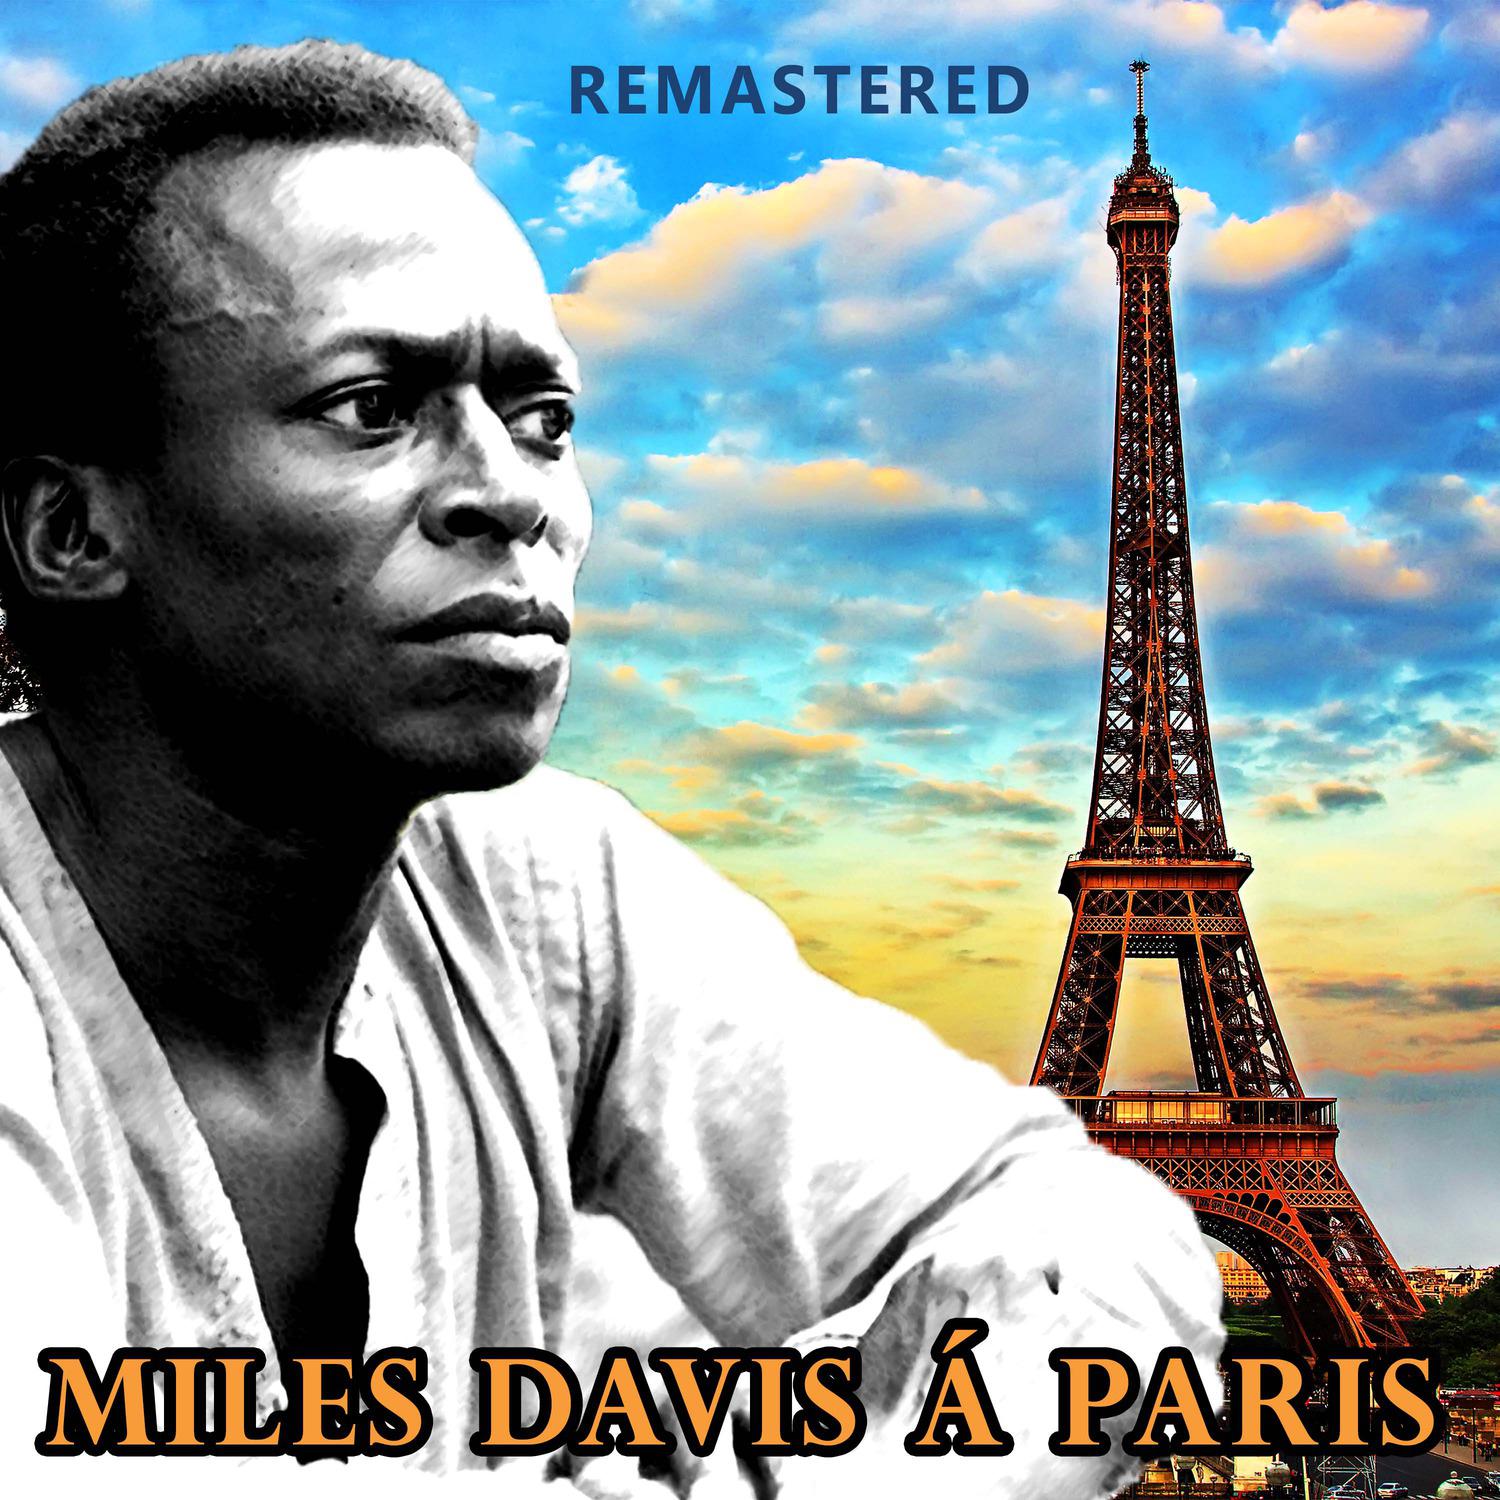 Miles Davis à Paris (Remastered)专辑